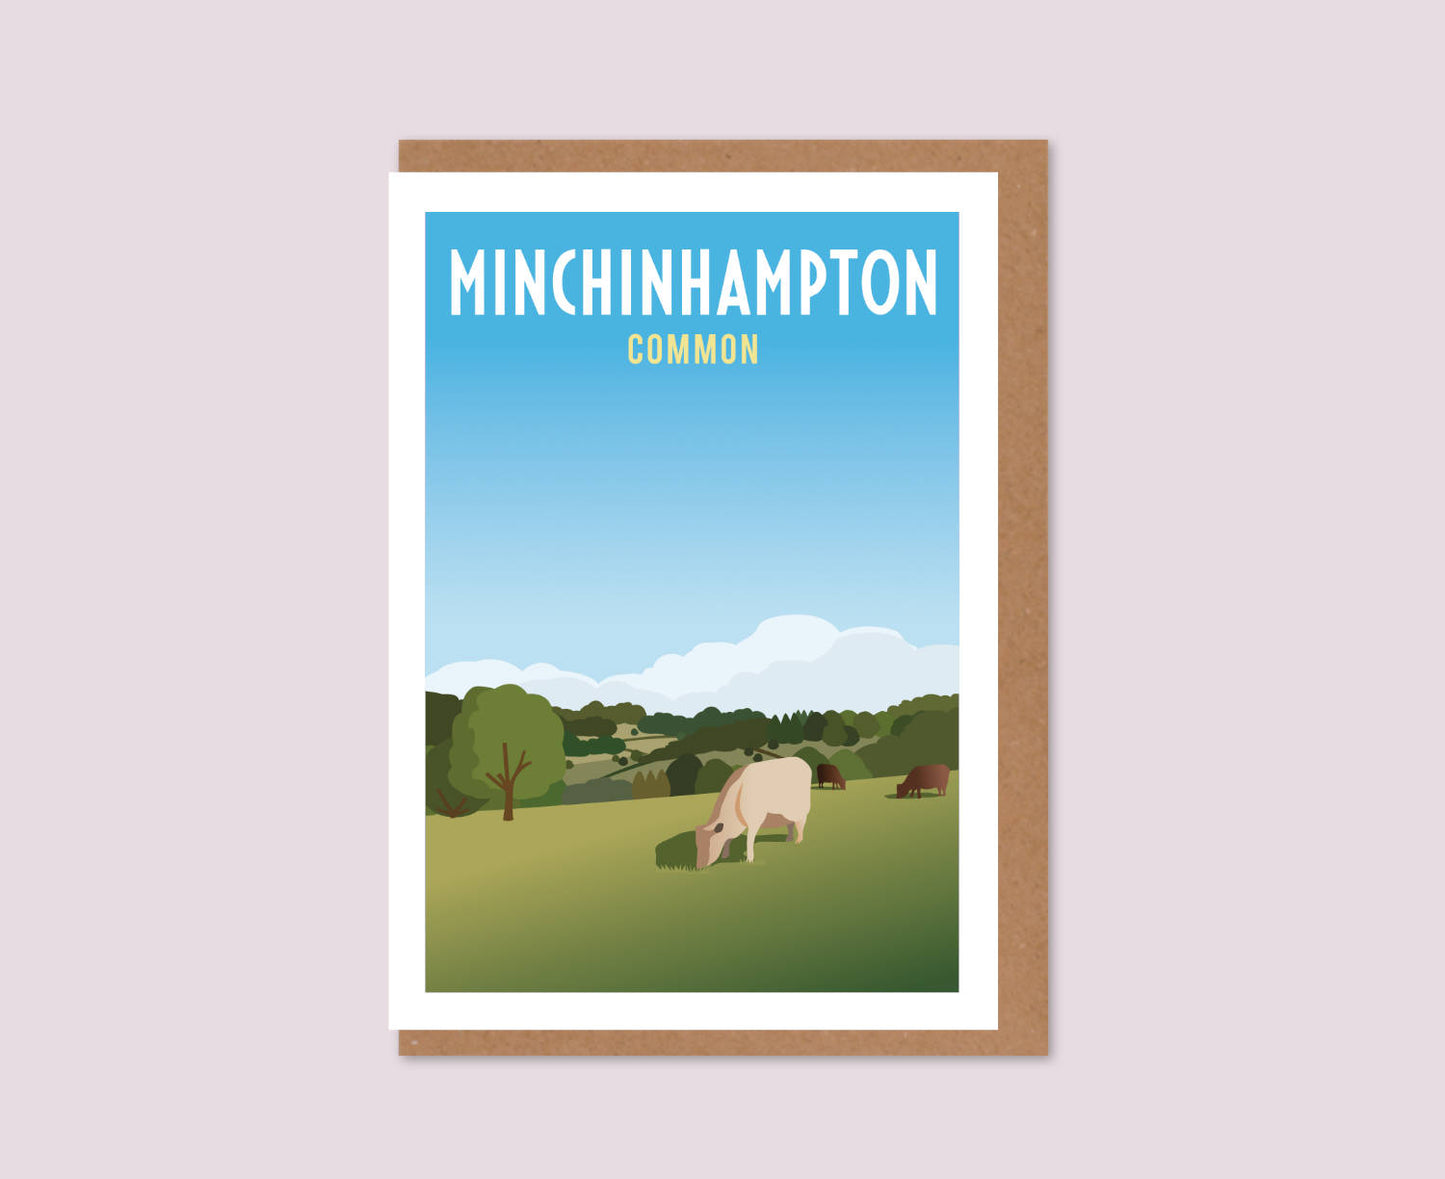 Minchinhampton Common Greeting Card design